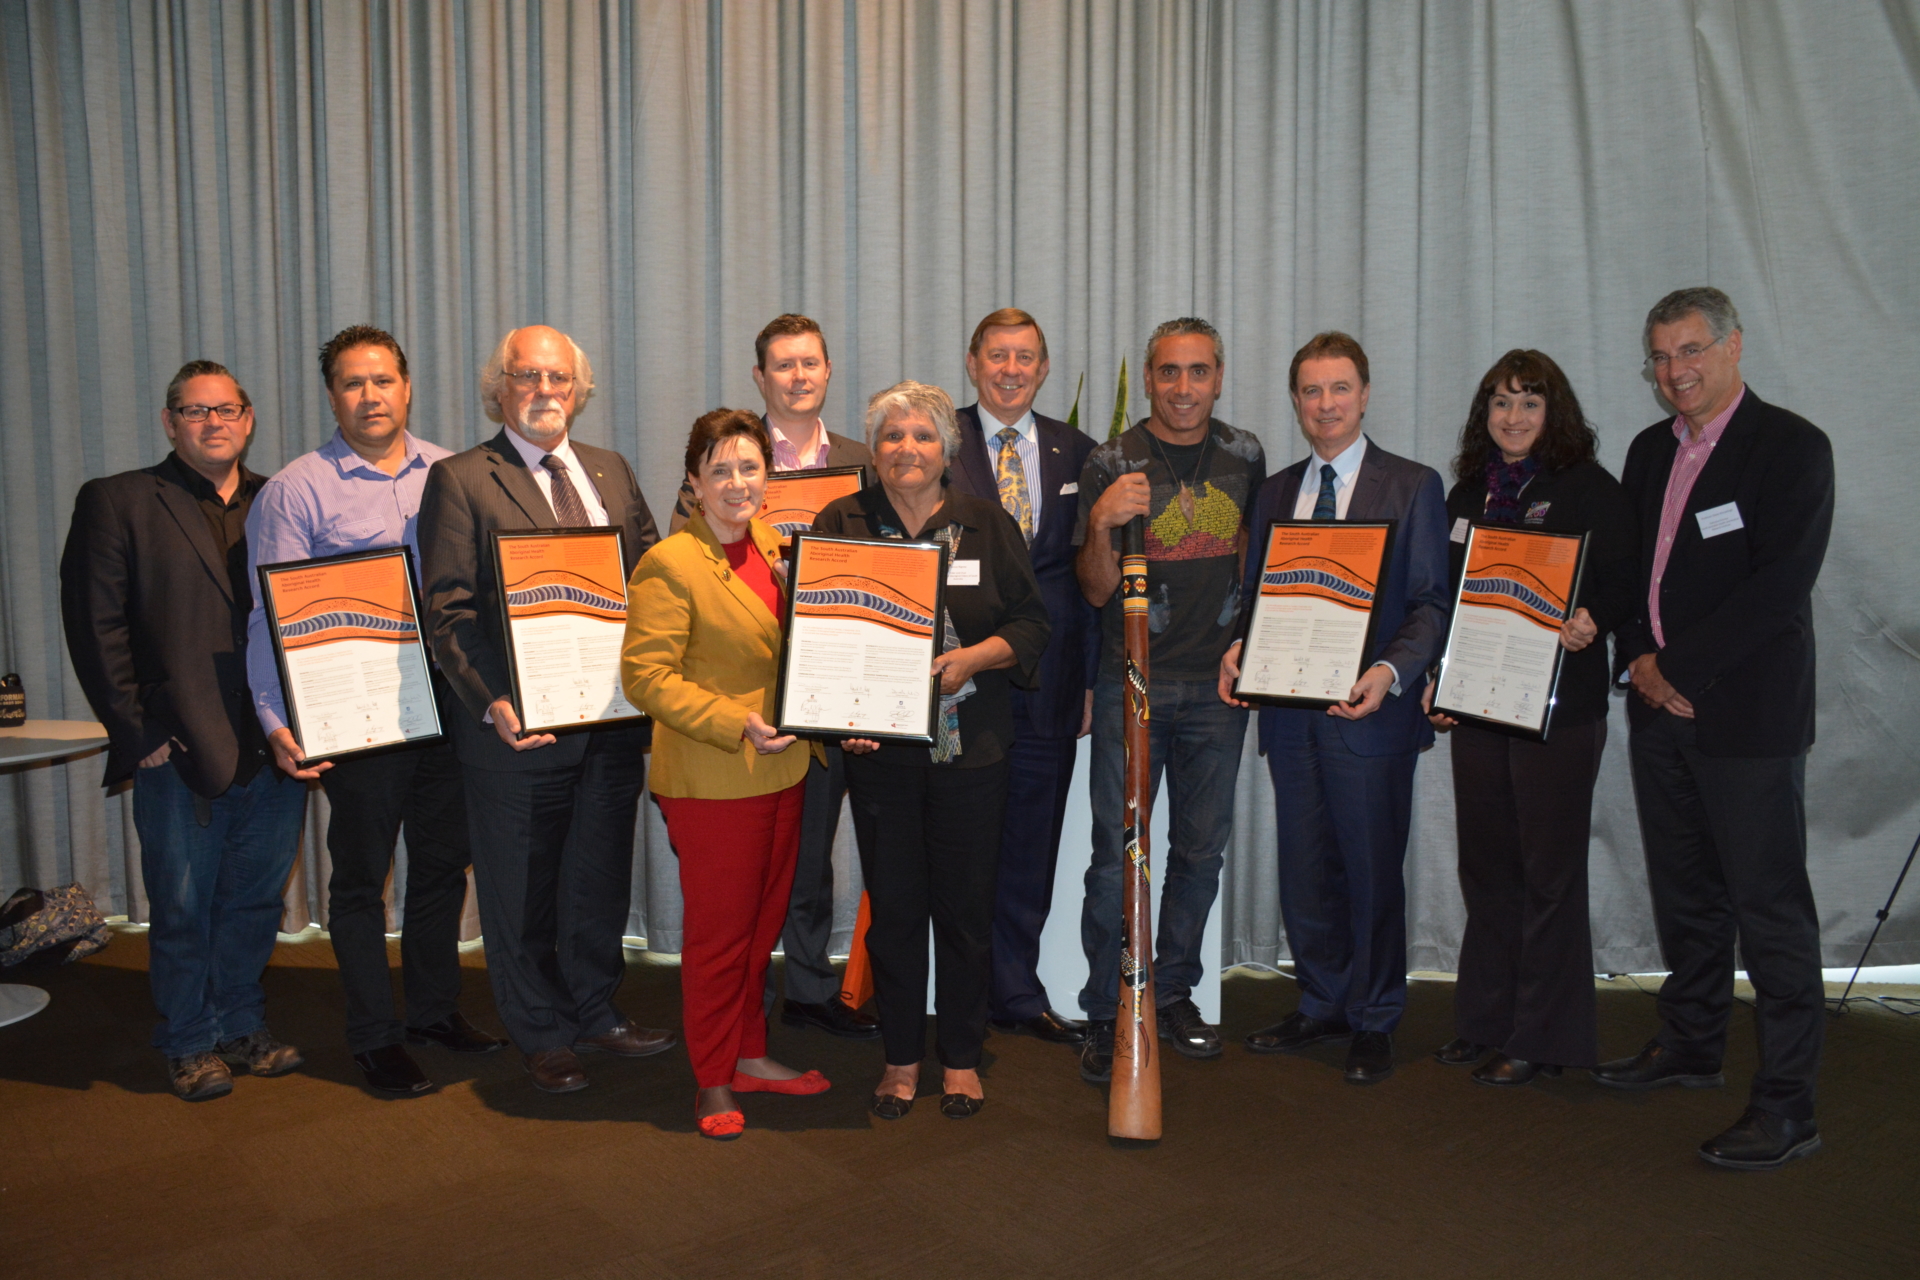 South Australian Aboriginal Health Research Accord